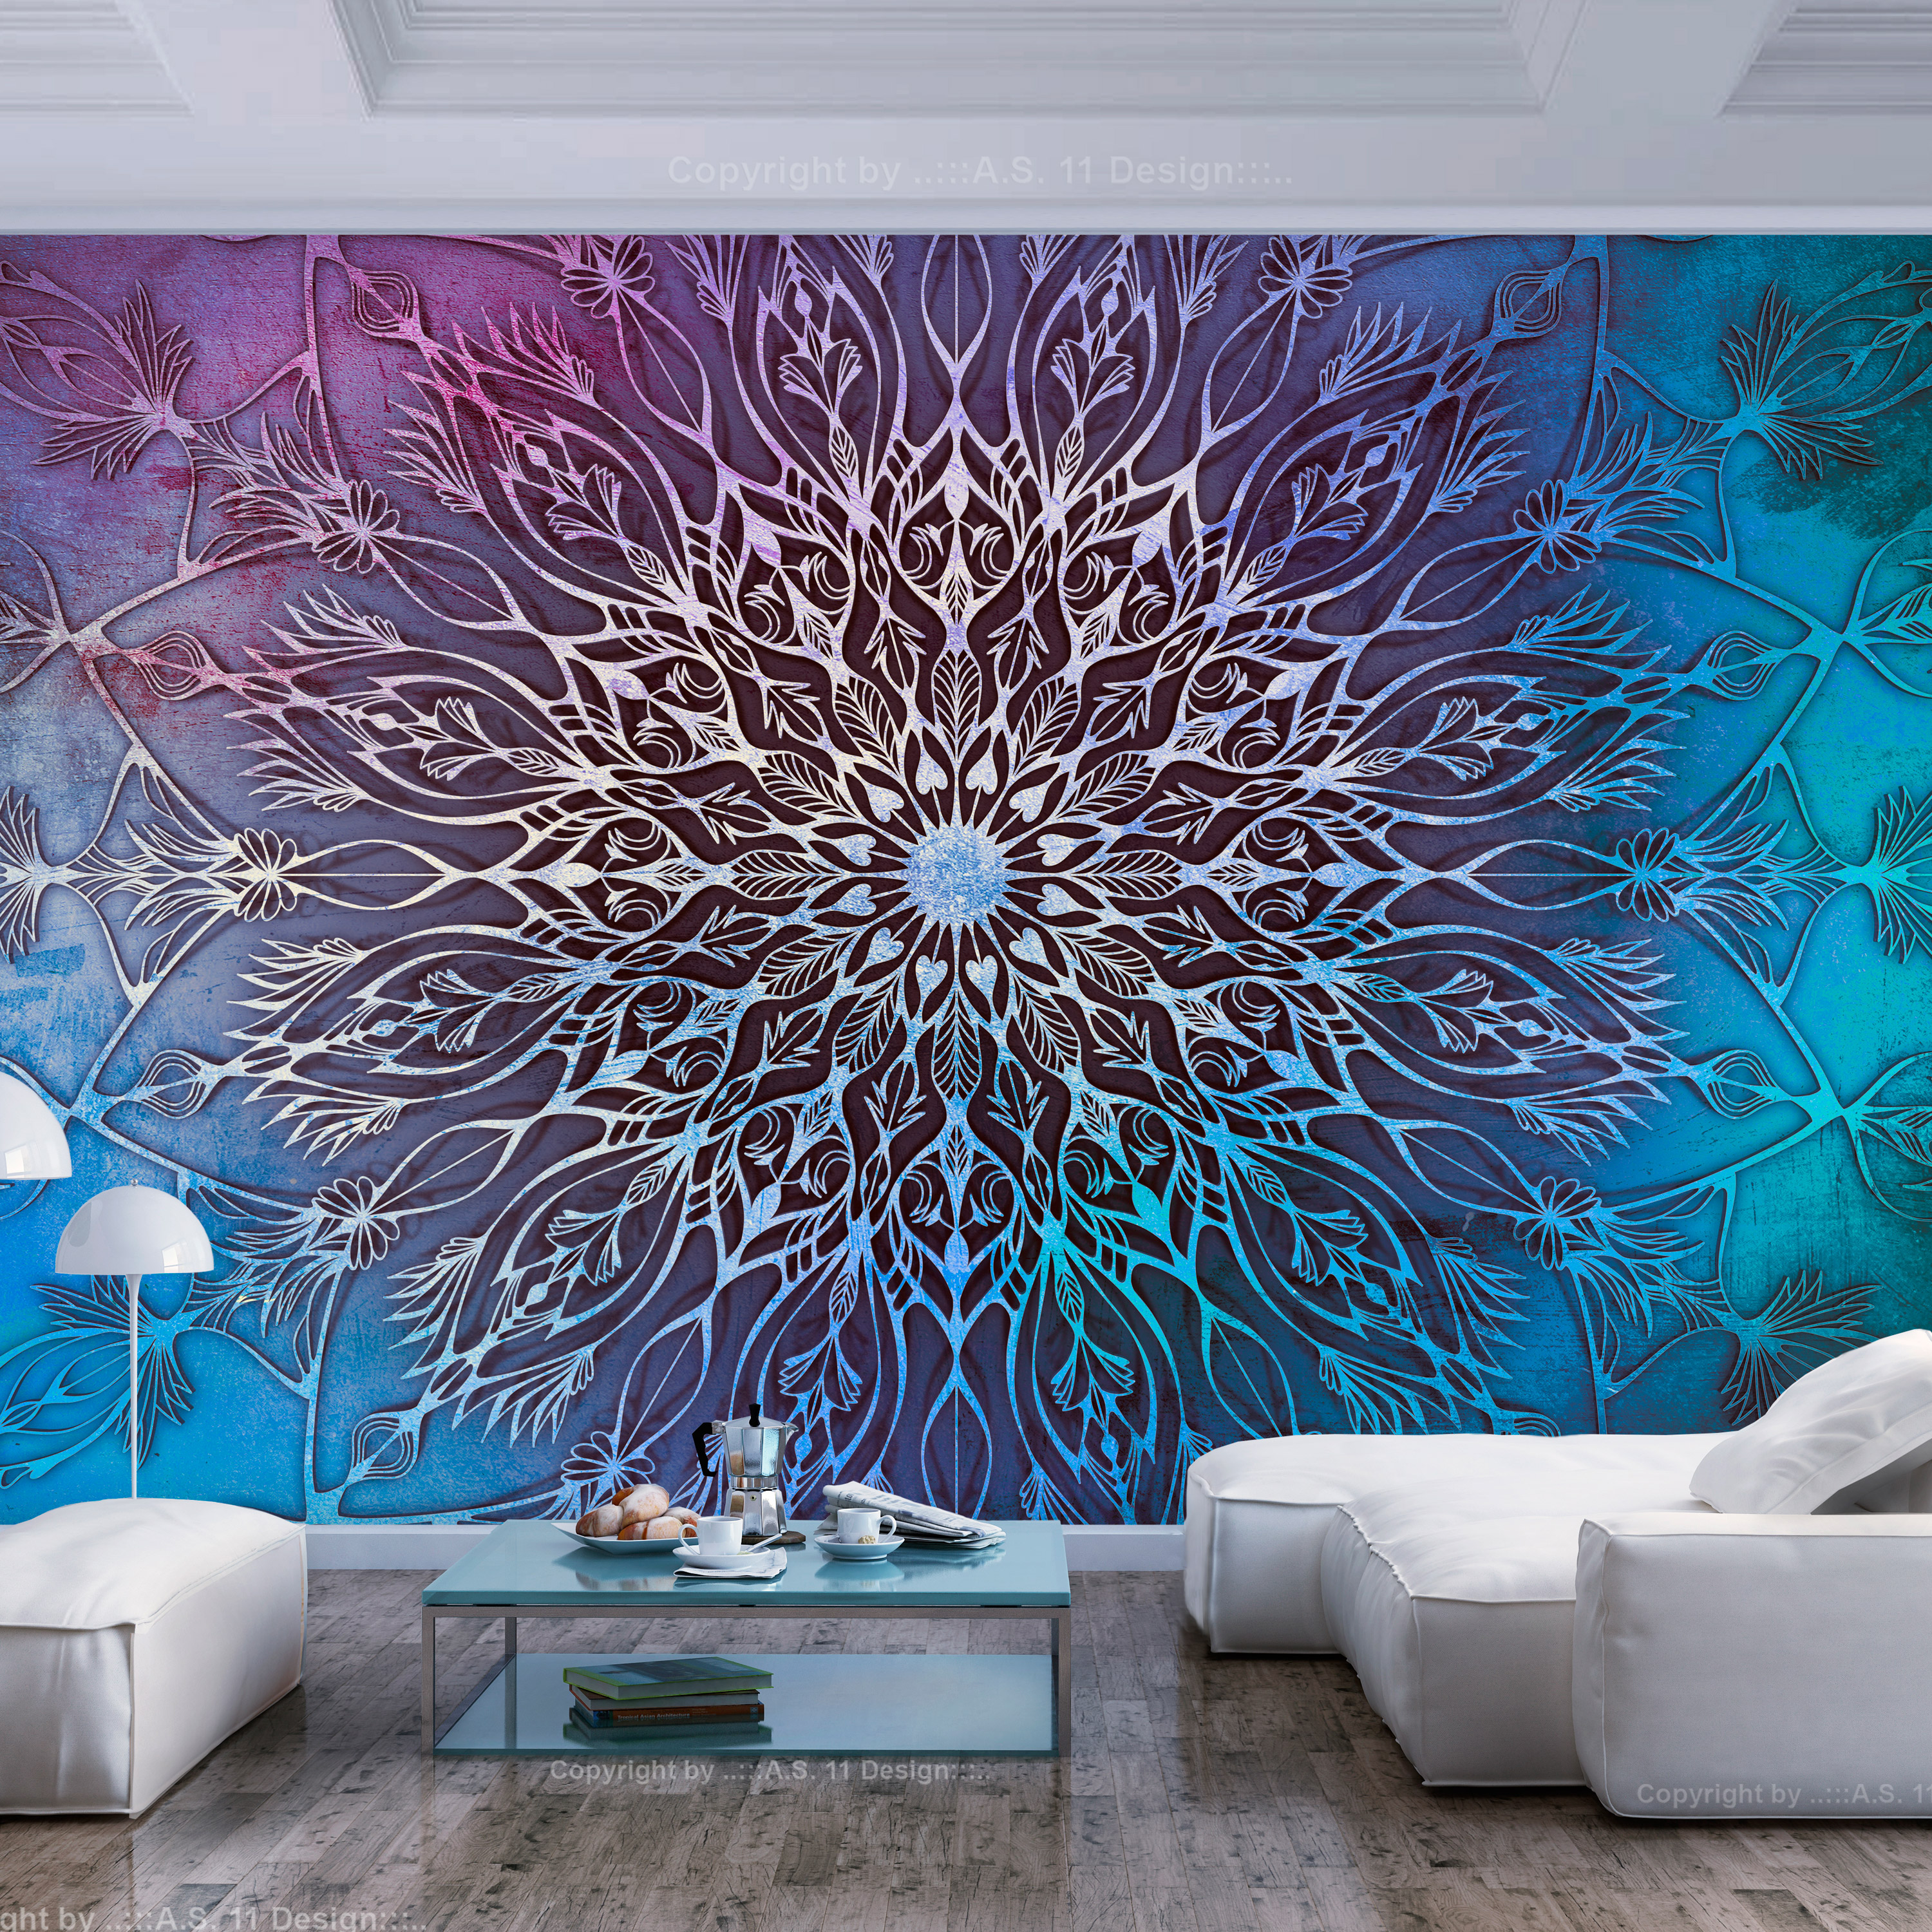 Self-adhesive Wallpaper - Center (Blue) - 98x70